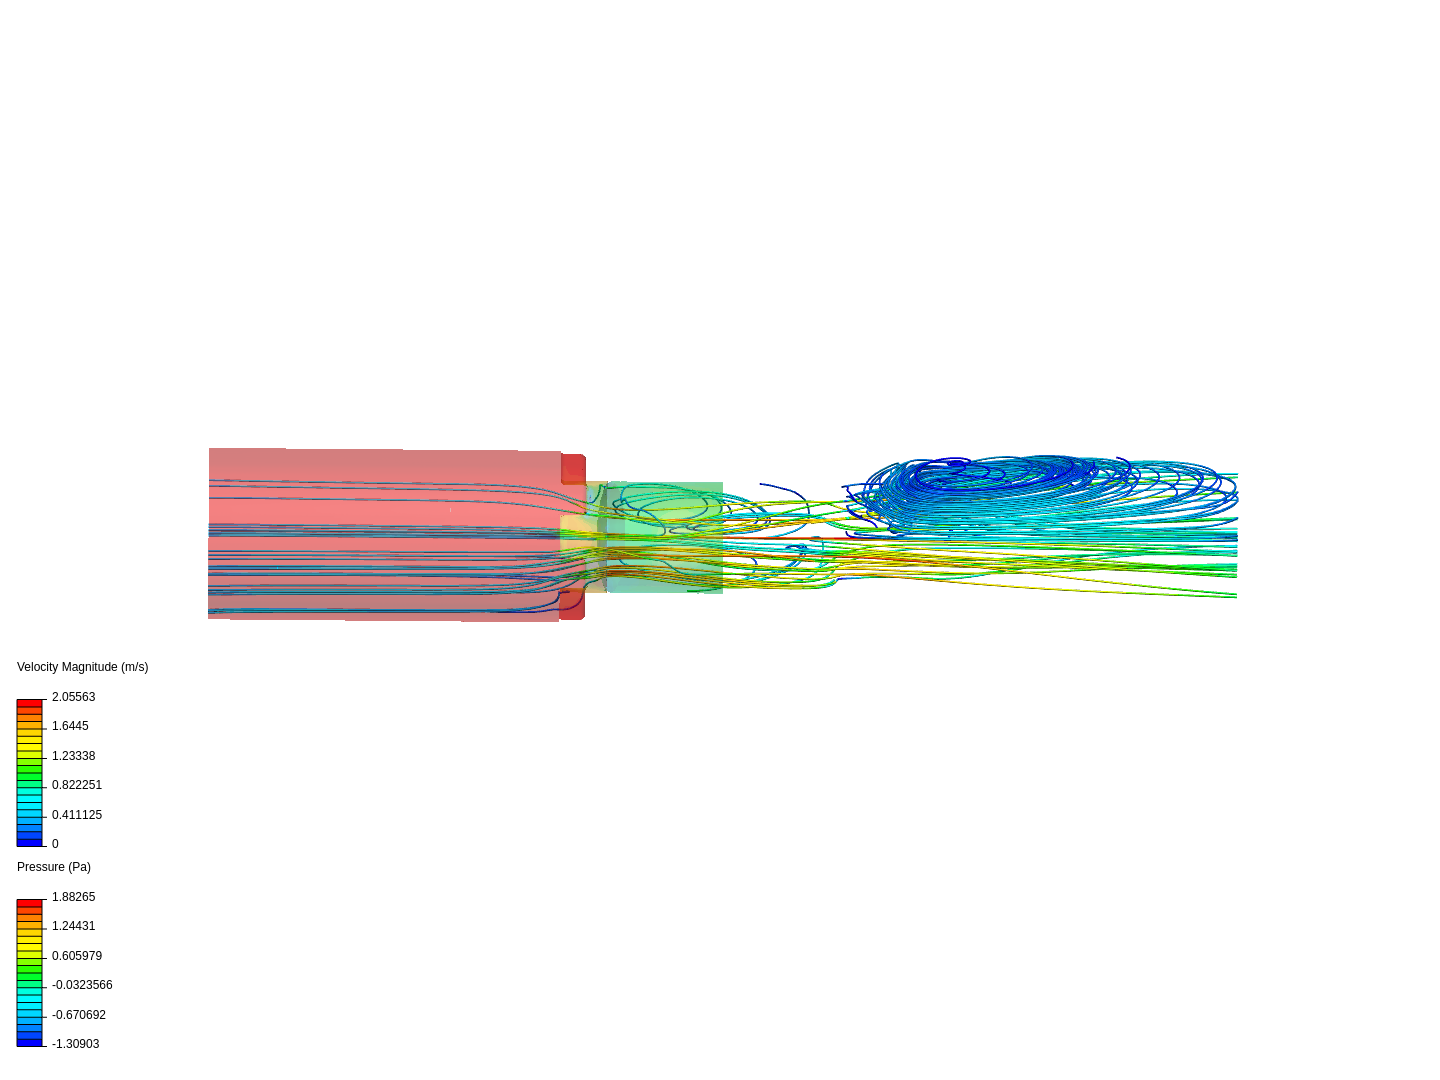 Ball-valve-flow-analysis image